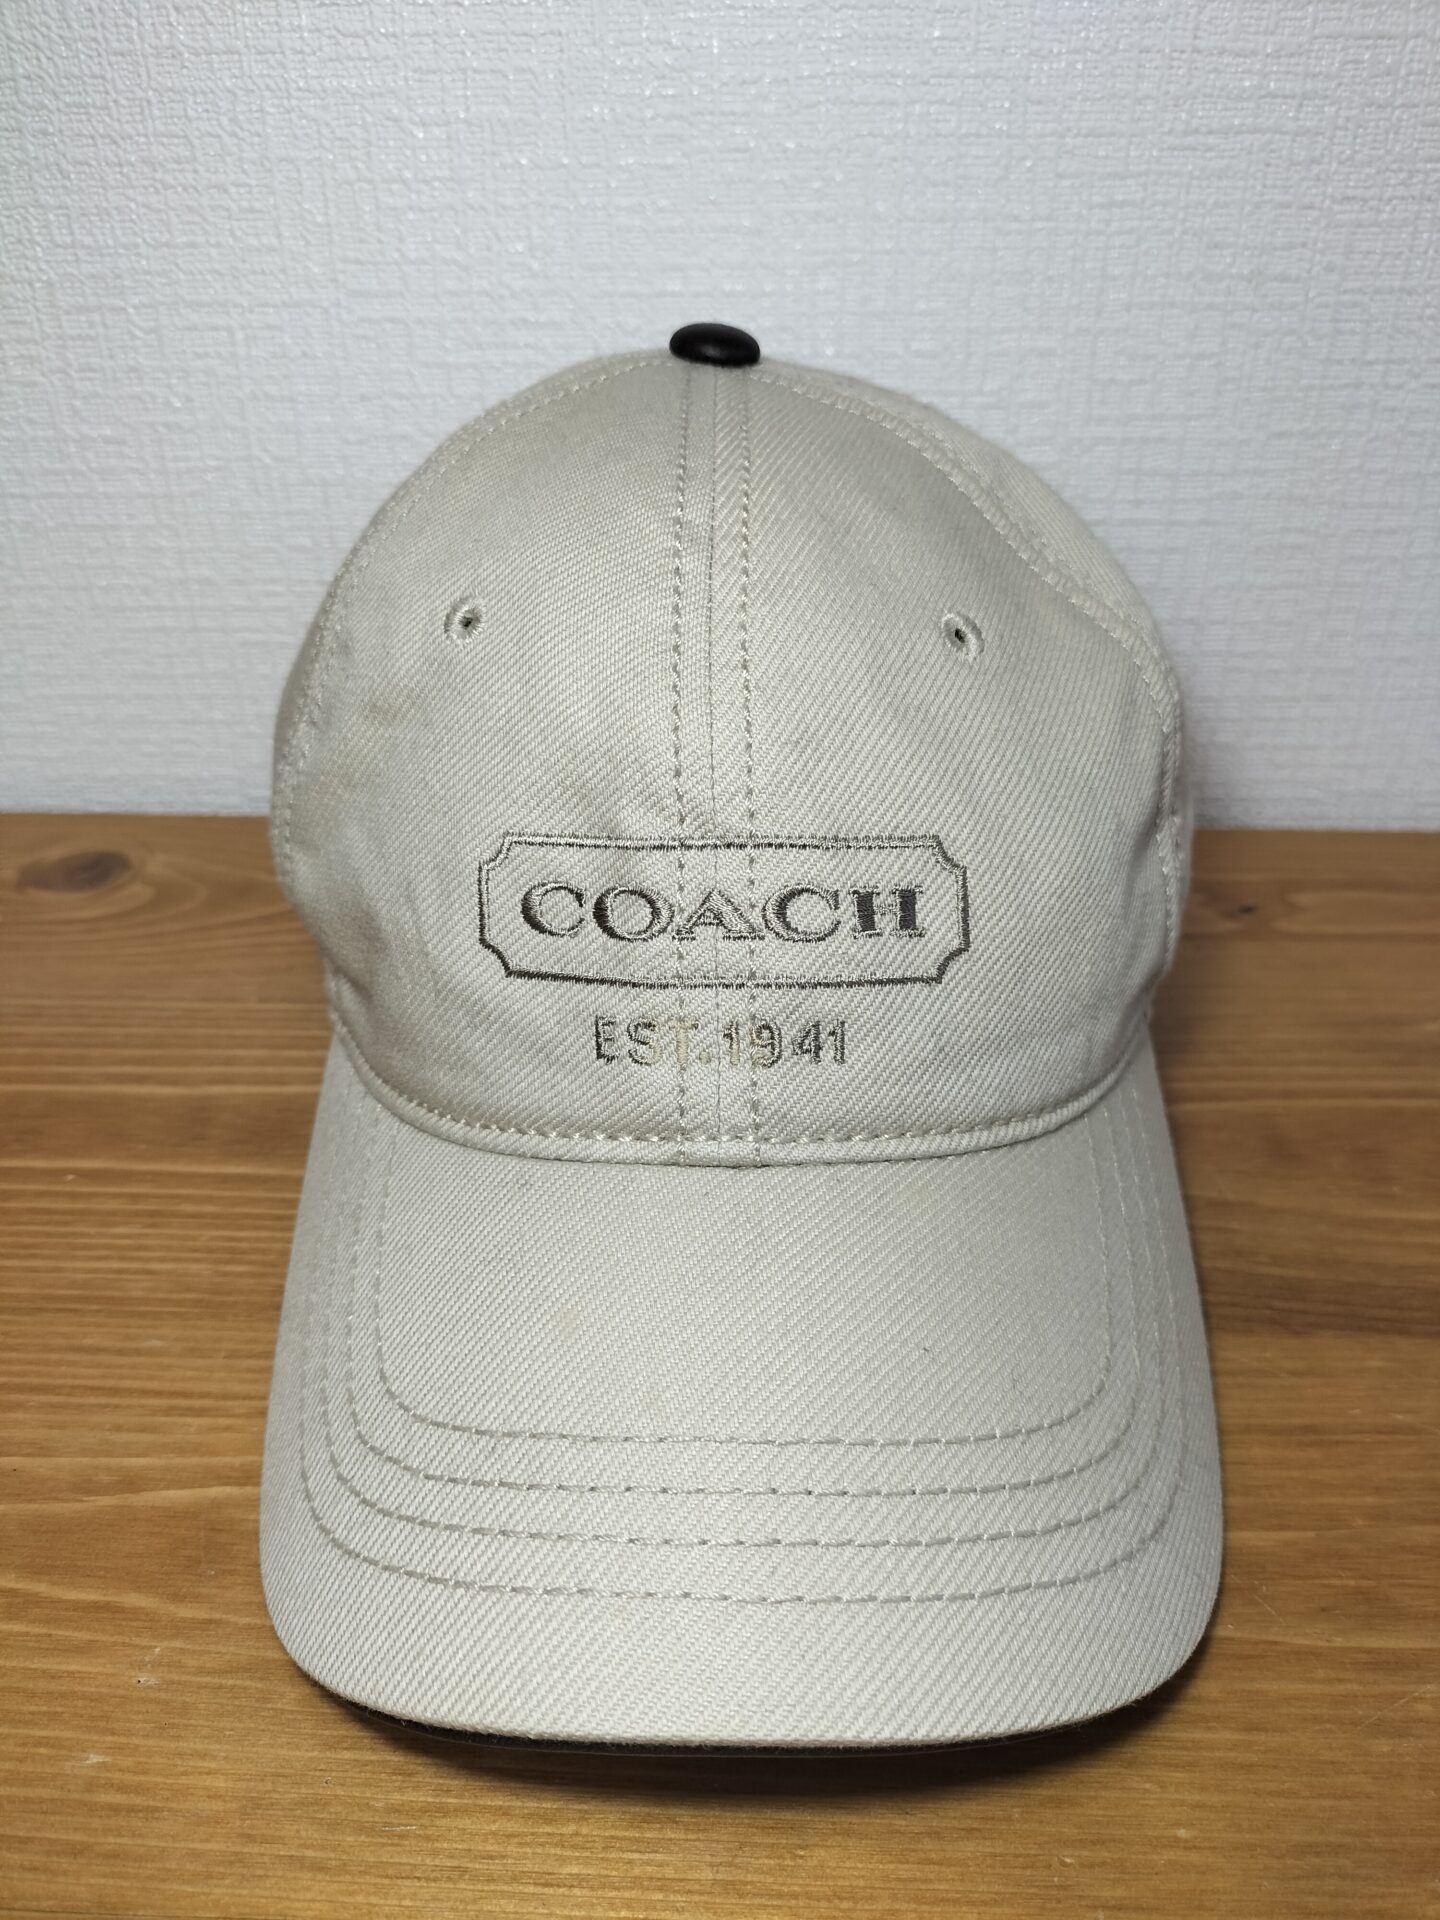 COACH コーチ 帽子 キャップ ロゴ 刺繍 ベージュ レザーベルト 金具